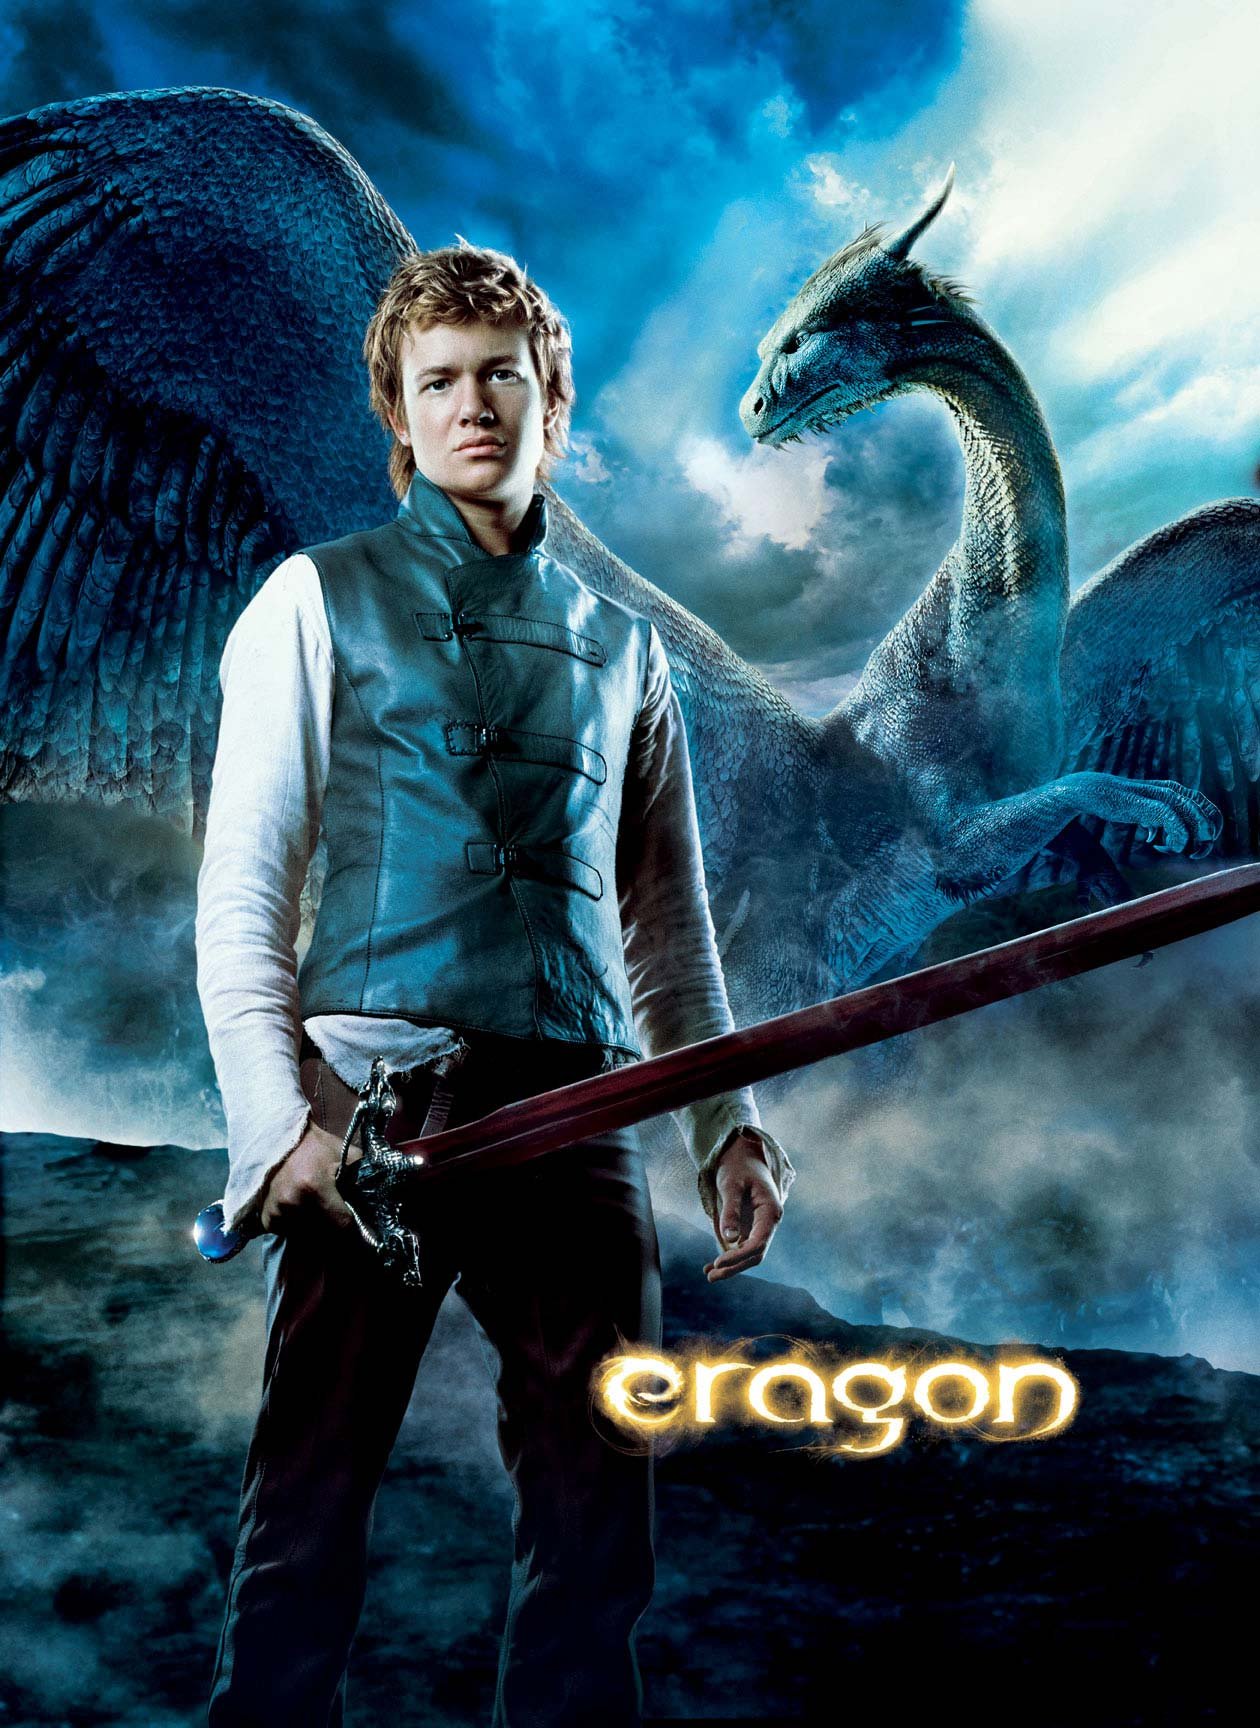 Eragon (2006) poster - FreeMoviePosters.net1260 x 1728